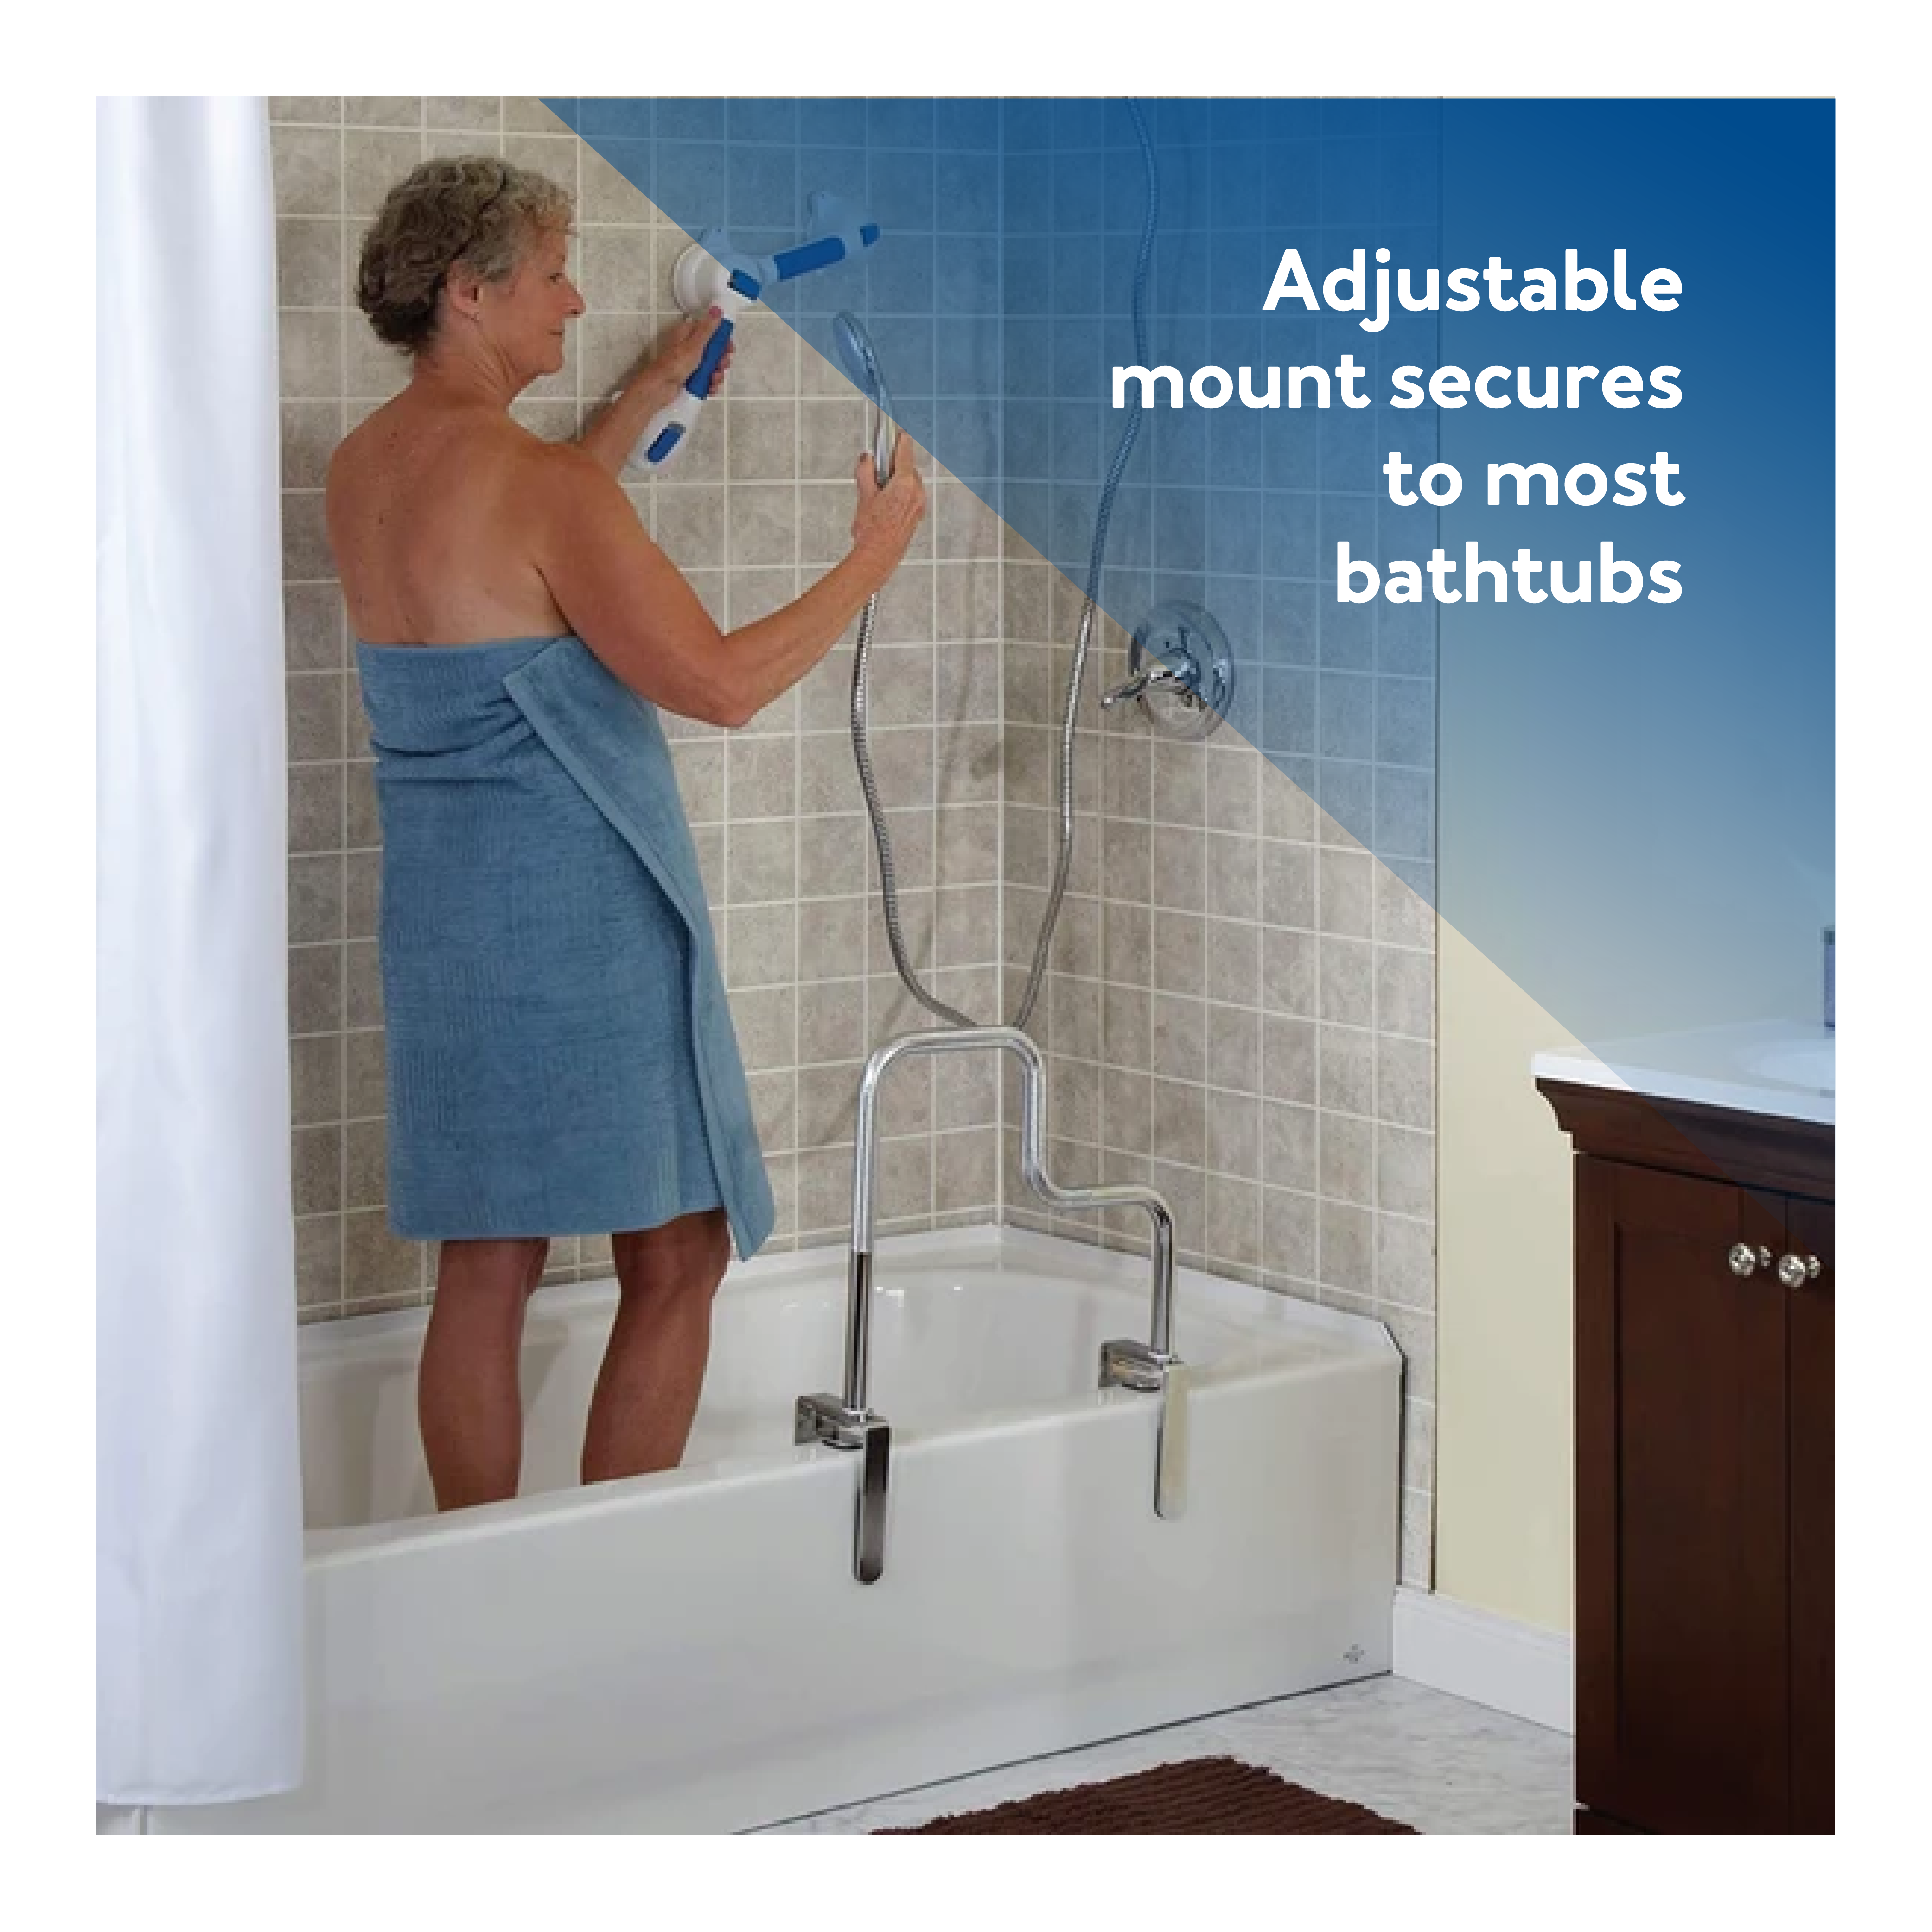 Tub grip Bathroom Safety Accessories at